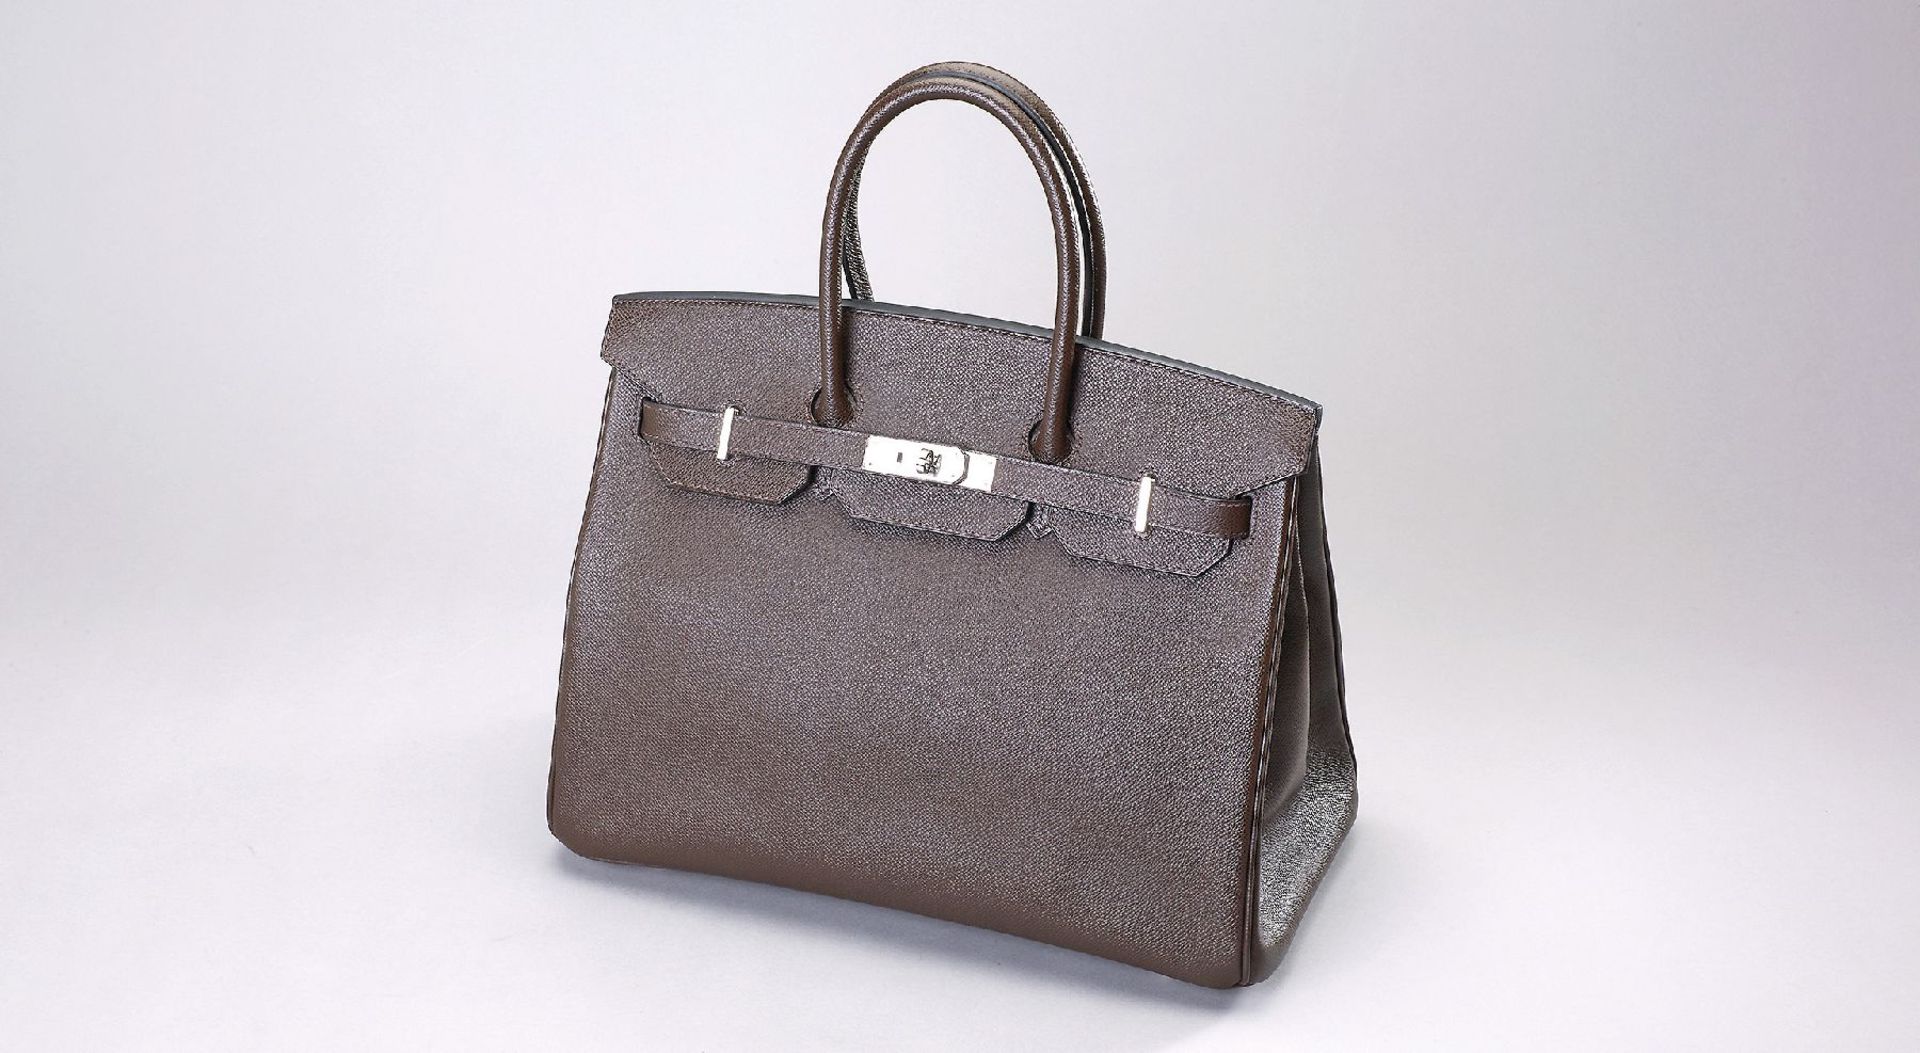 HERMES BIRKIN BAG 35, Ardennes leather , darkbrown, silver coloured fixtures, 2 handles, high